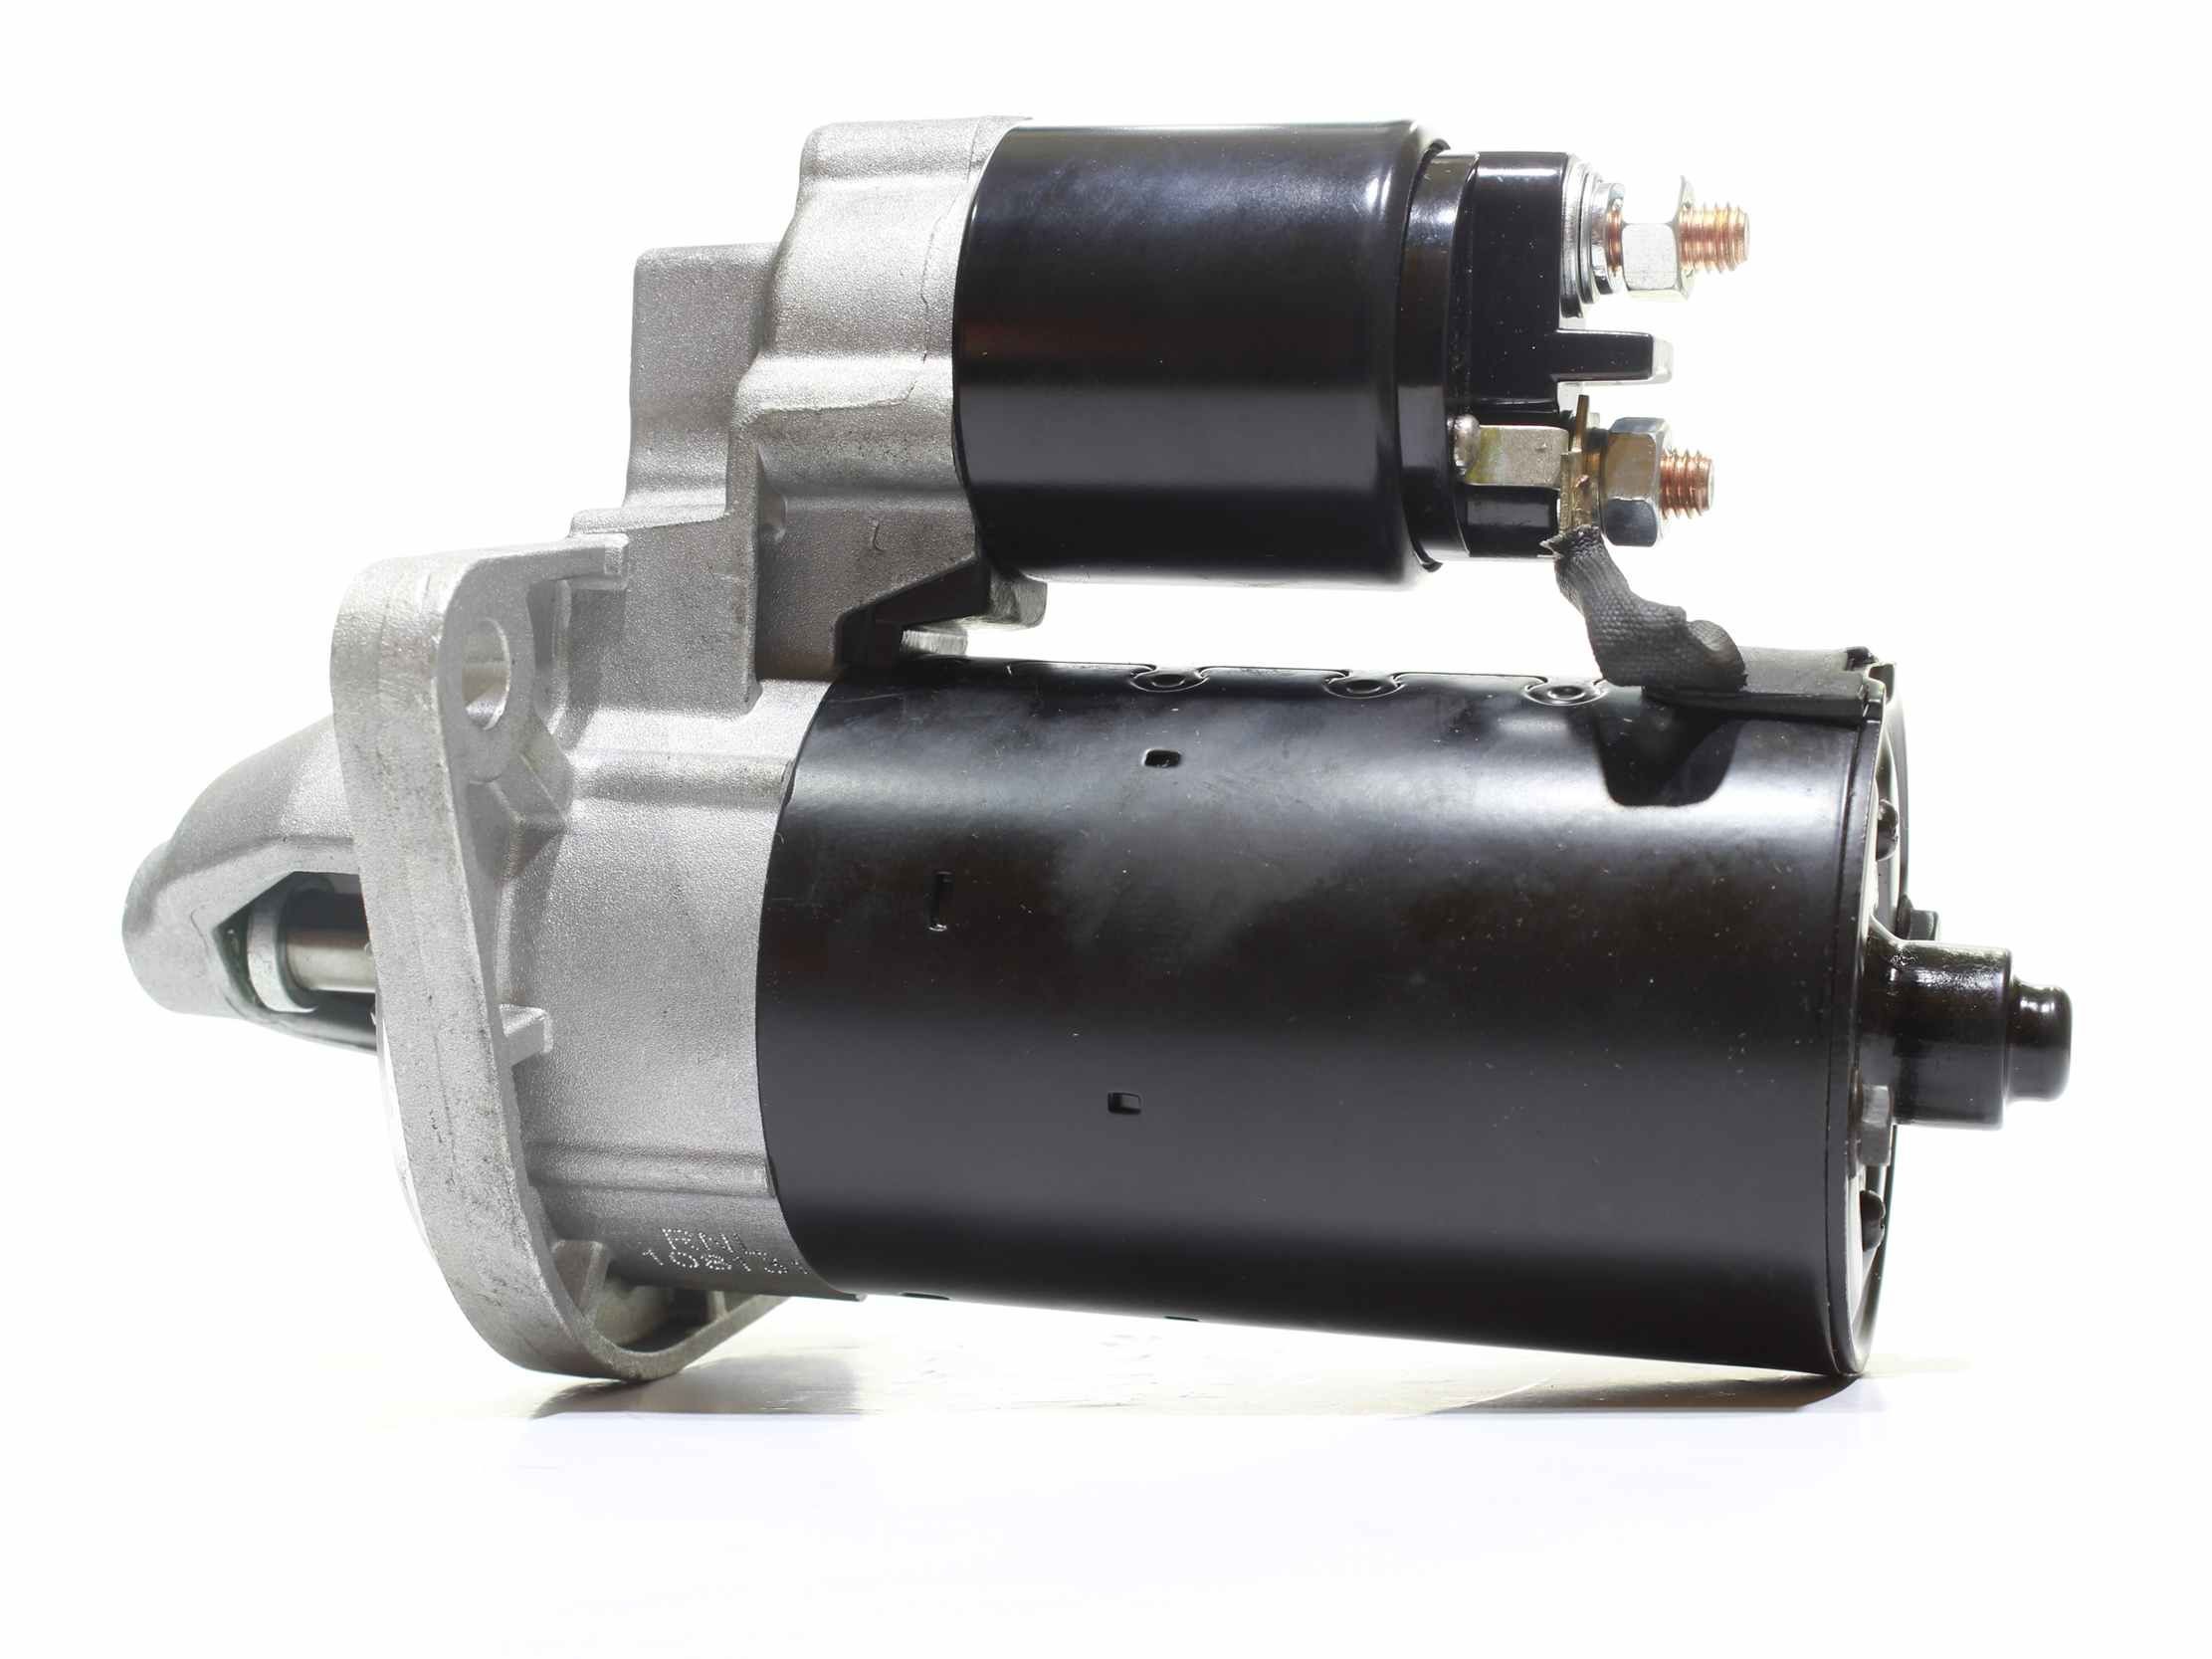 10439911 Engine starter motor ALANKO STR10024 review and test